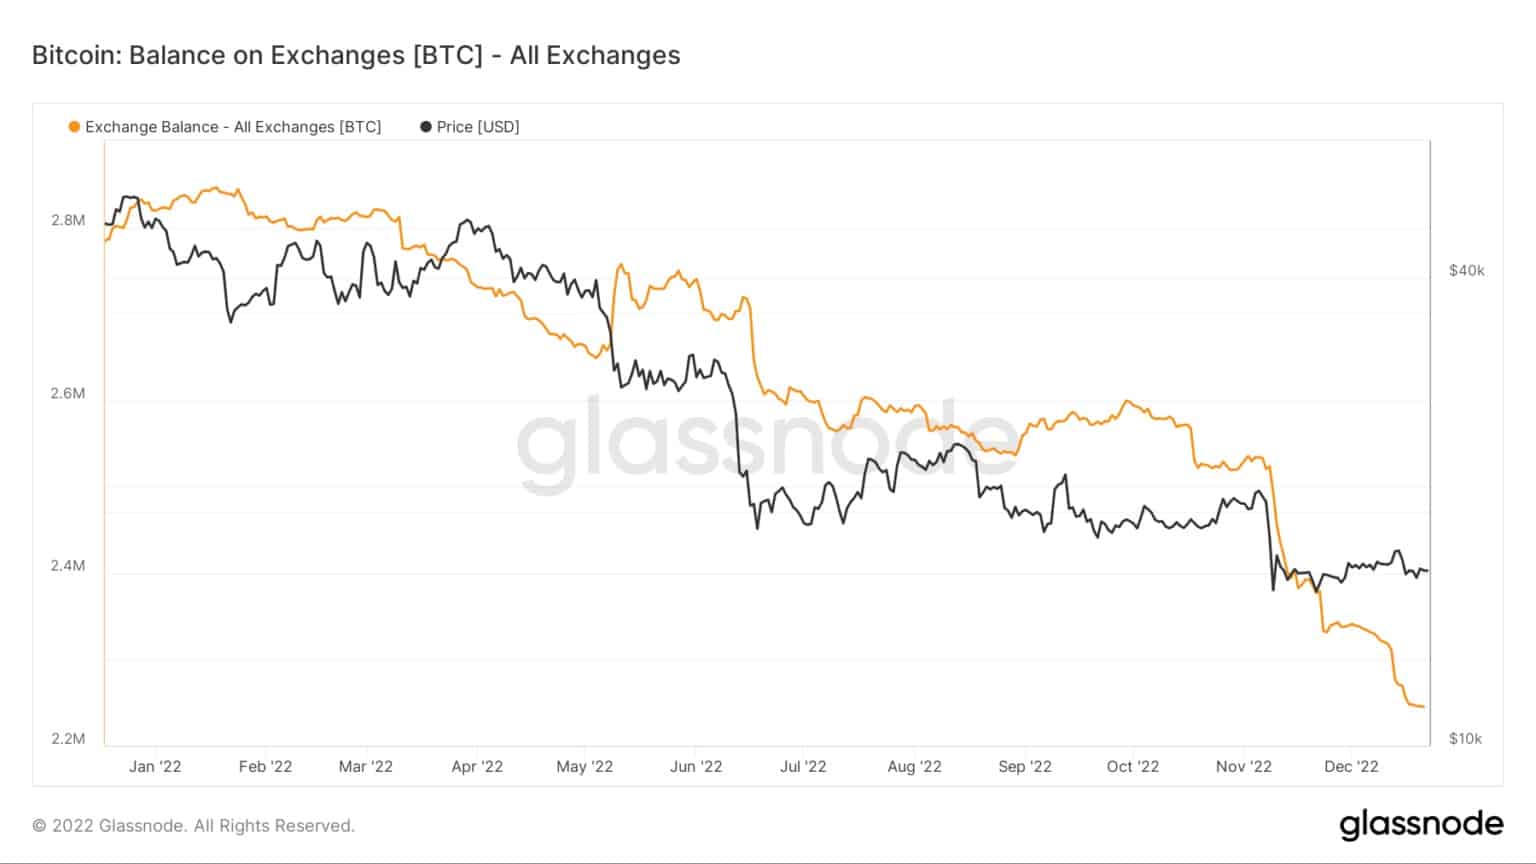 BTC balance on exchanges / Source: Glassnode